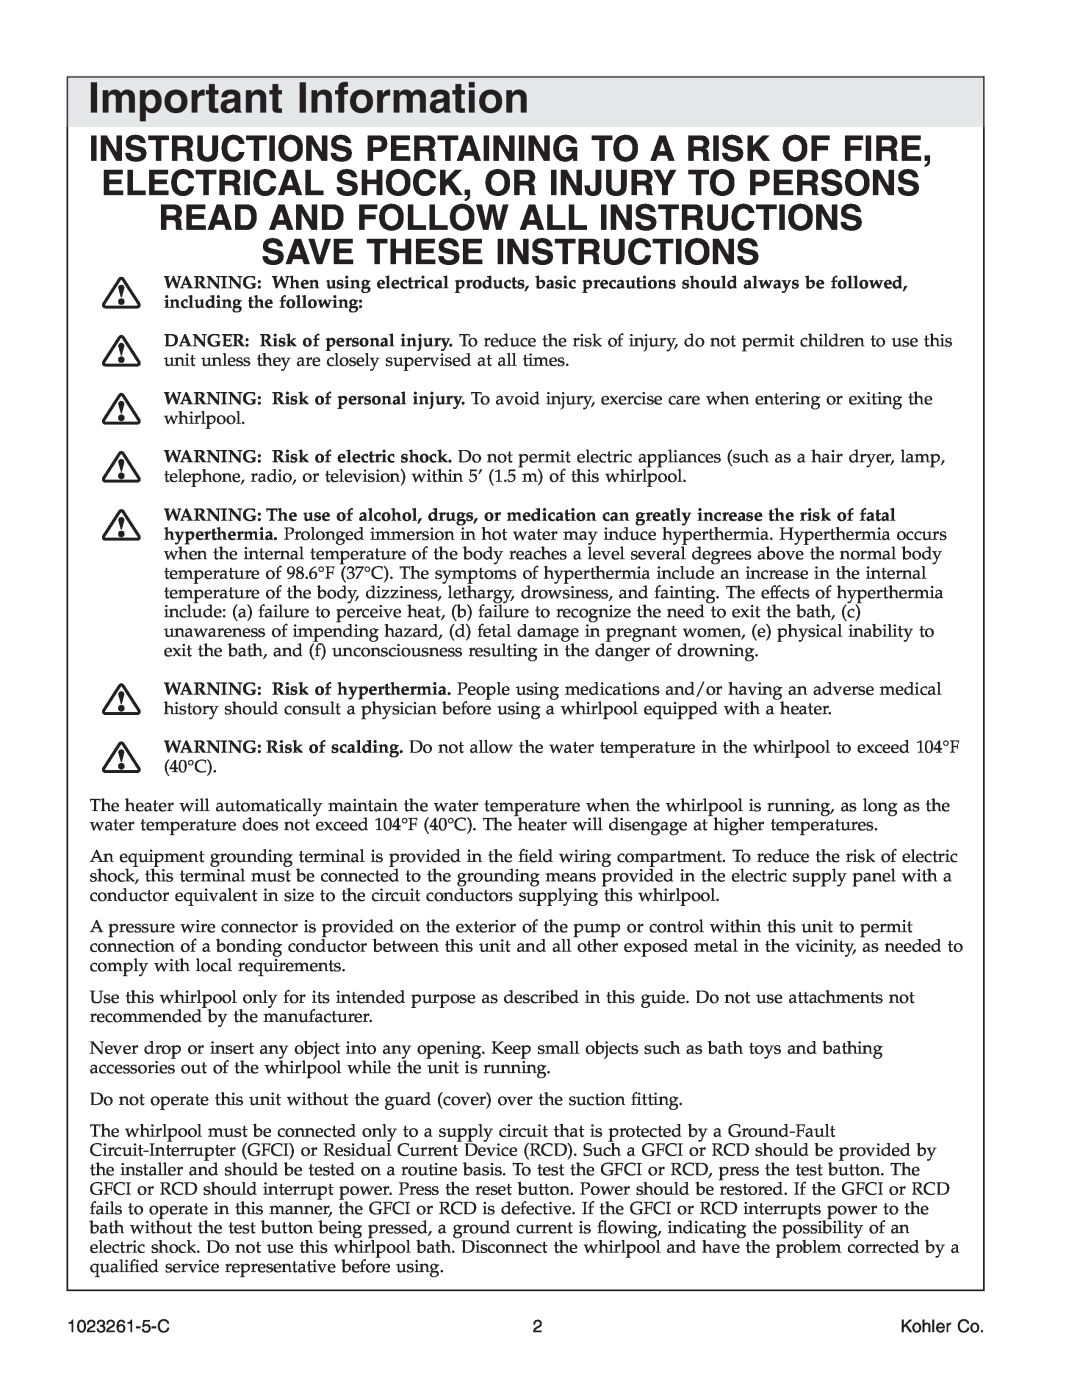 Kohler K-1110-CT manual Important Information, Save These Instructions 